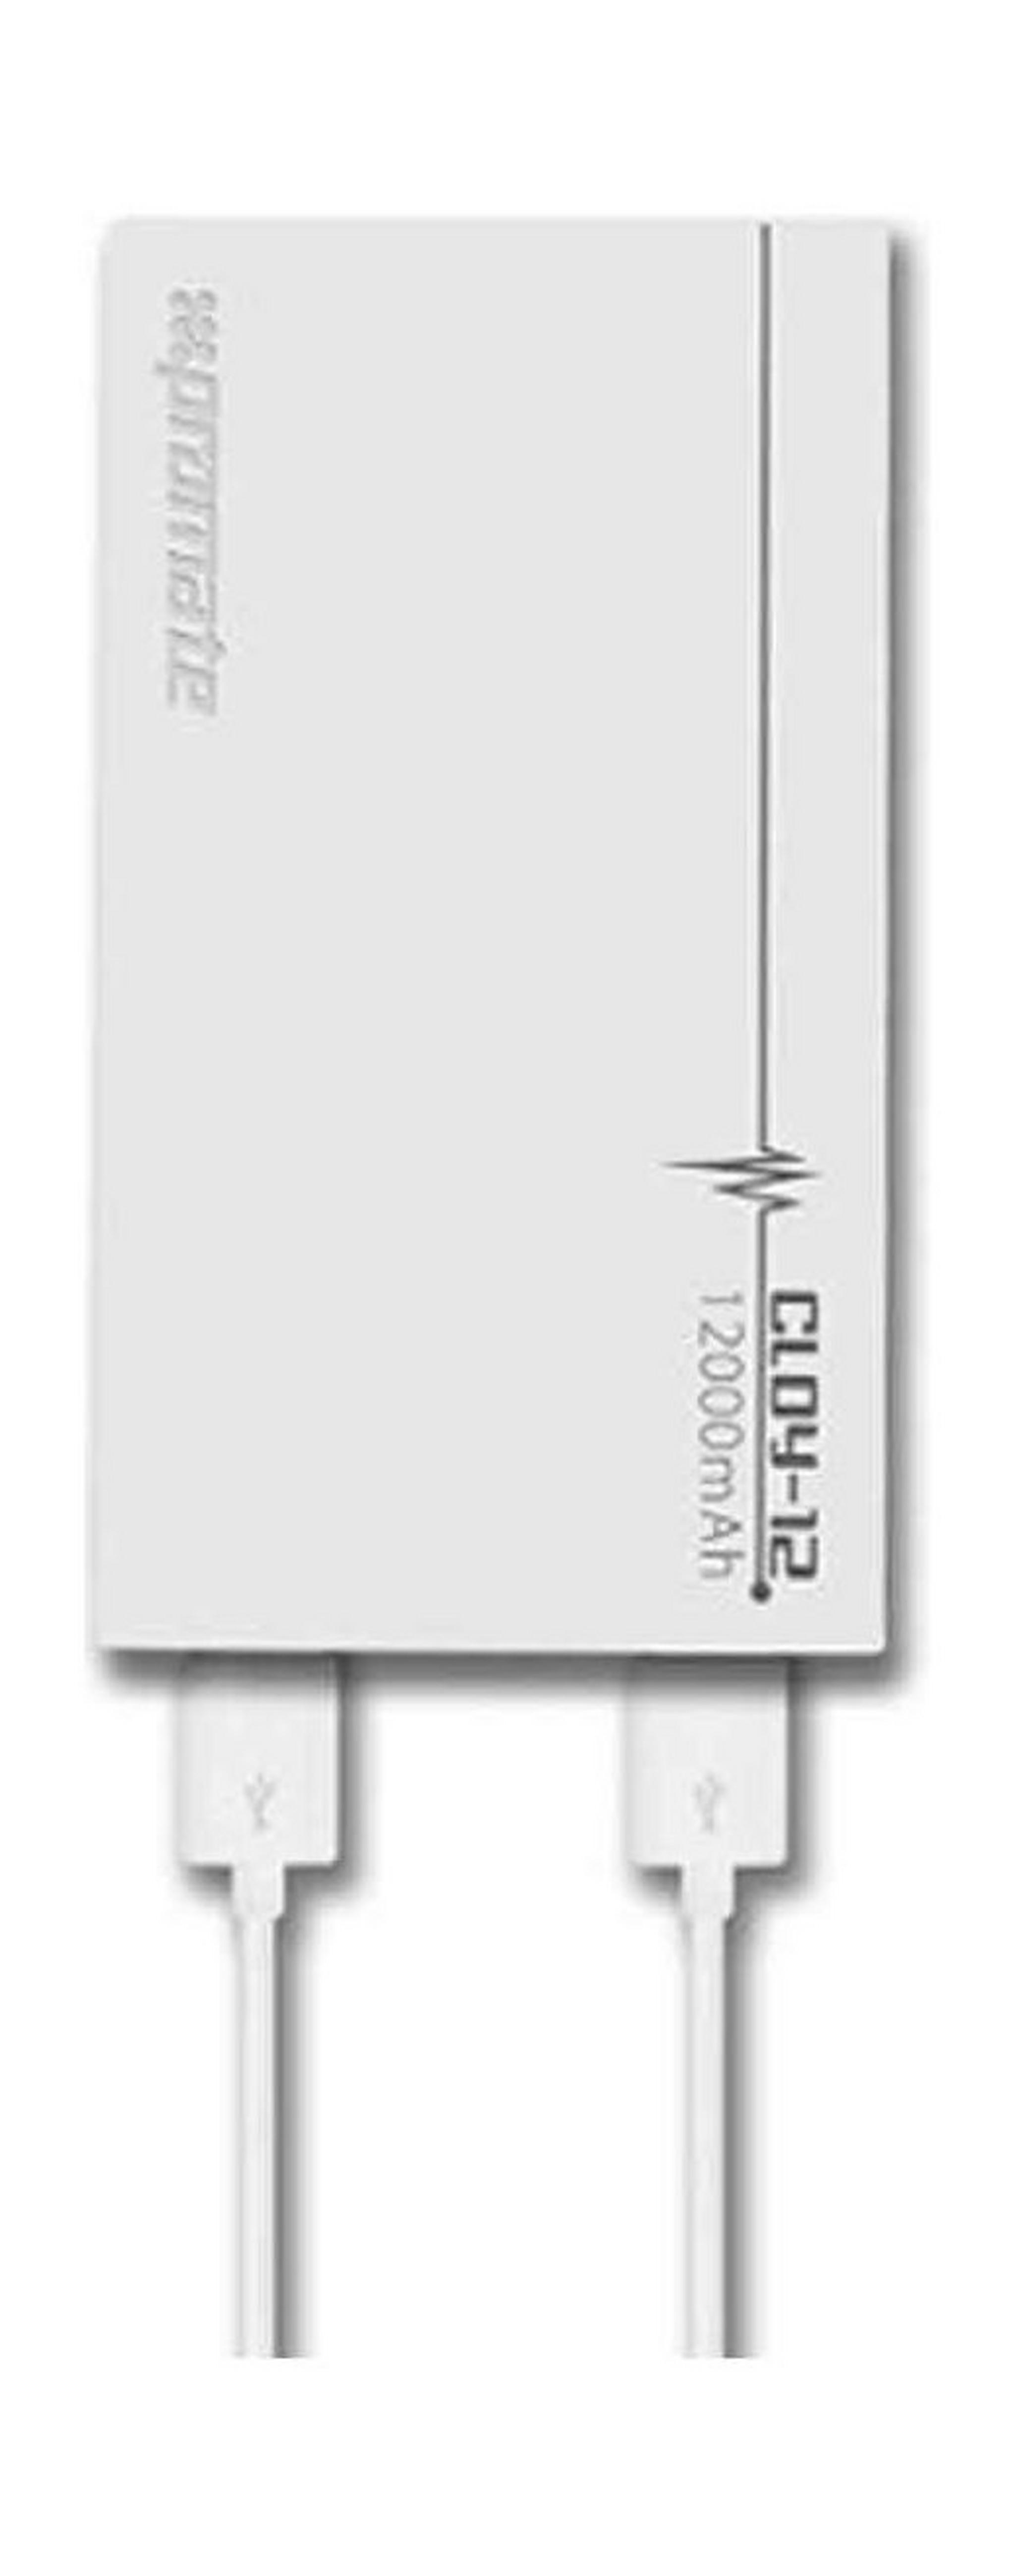 Promate Cloy-12 Premium Dual USB 12000mAh Power Bank - White